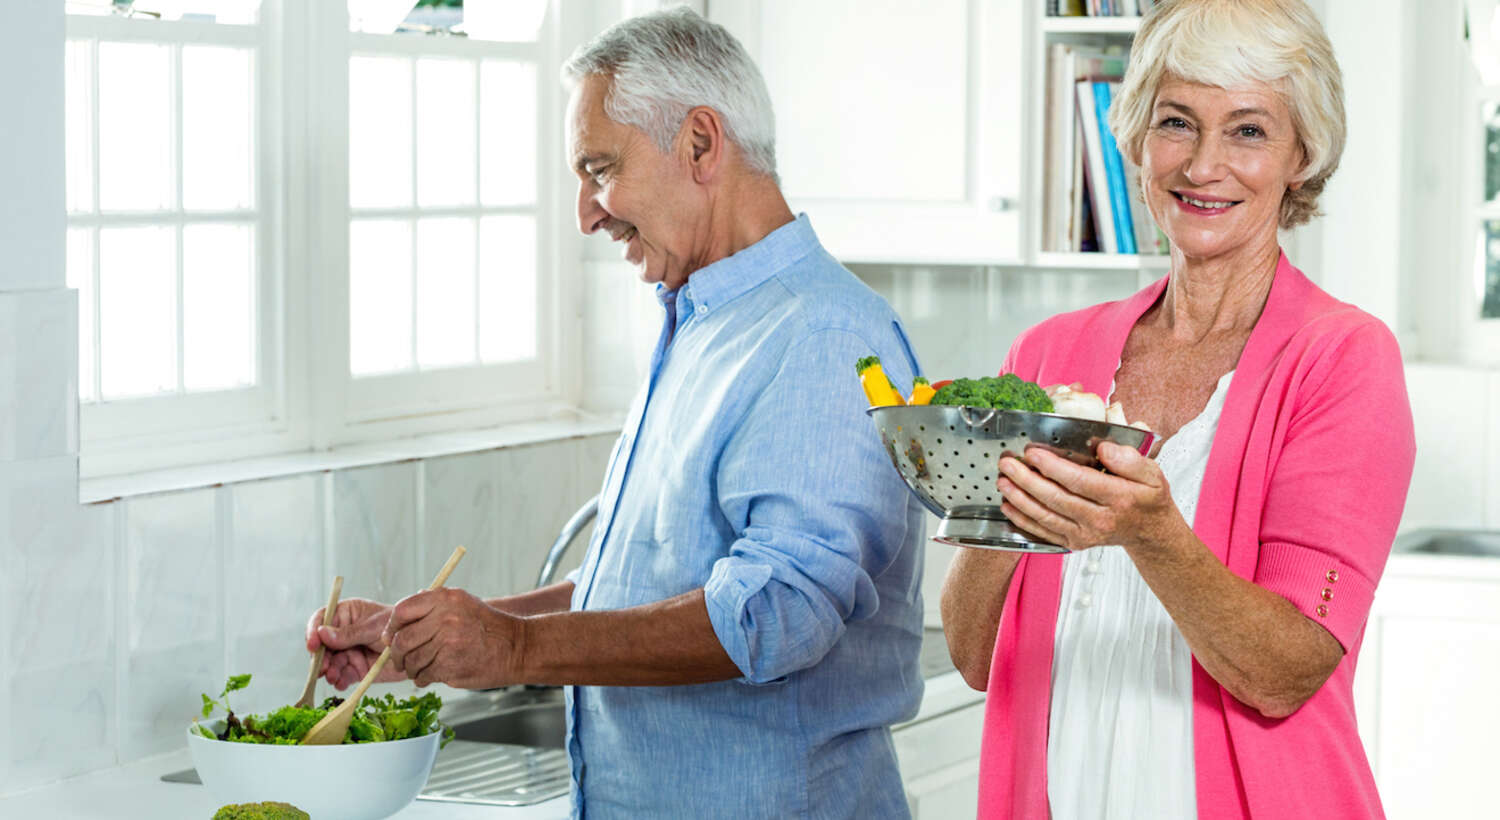 Seniorenpaar bereitet Gemüse zu